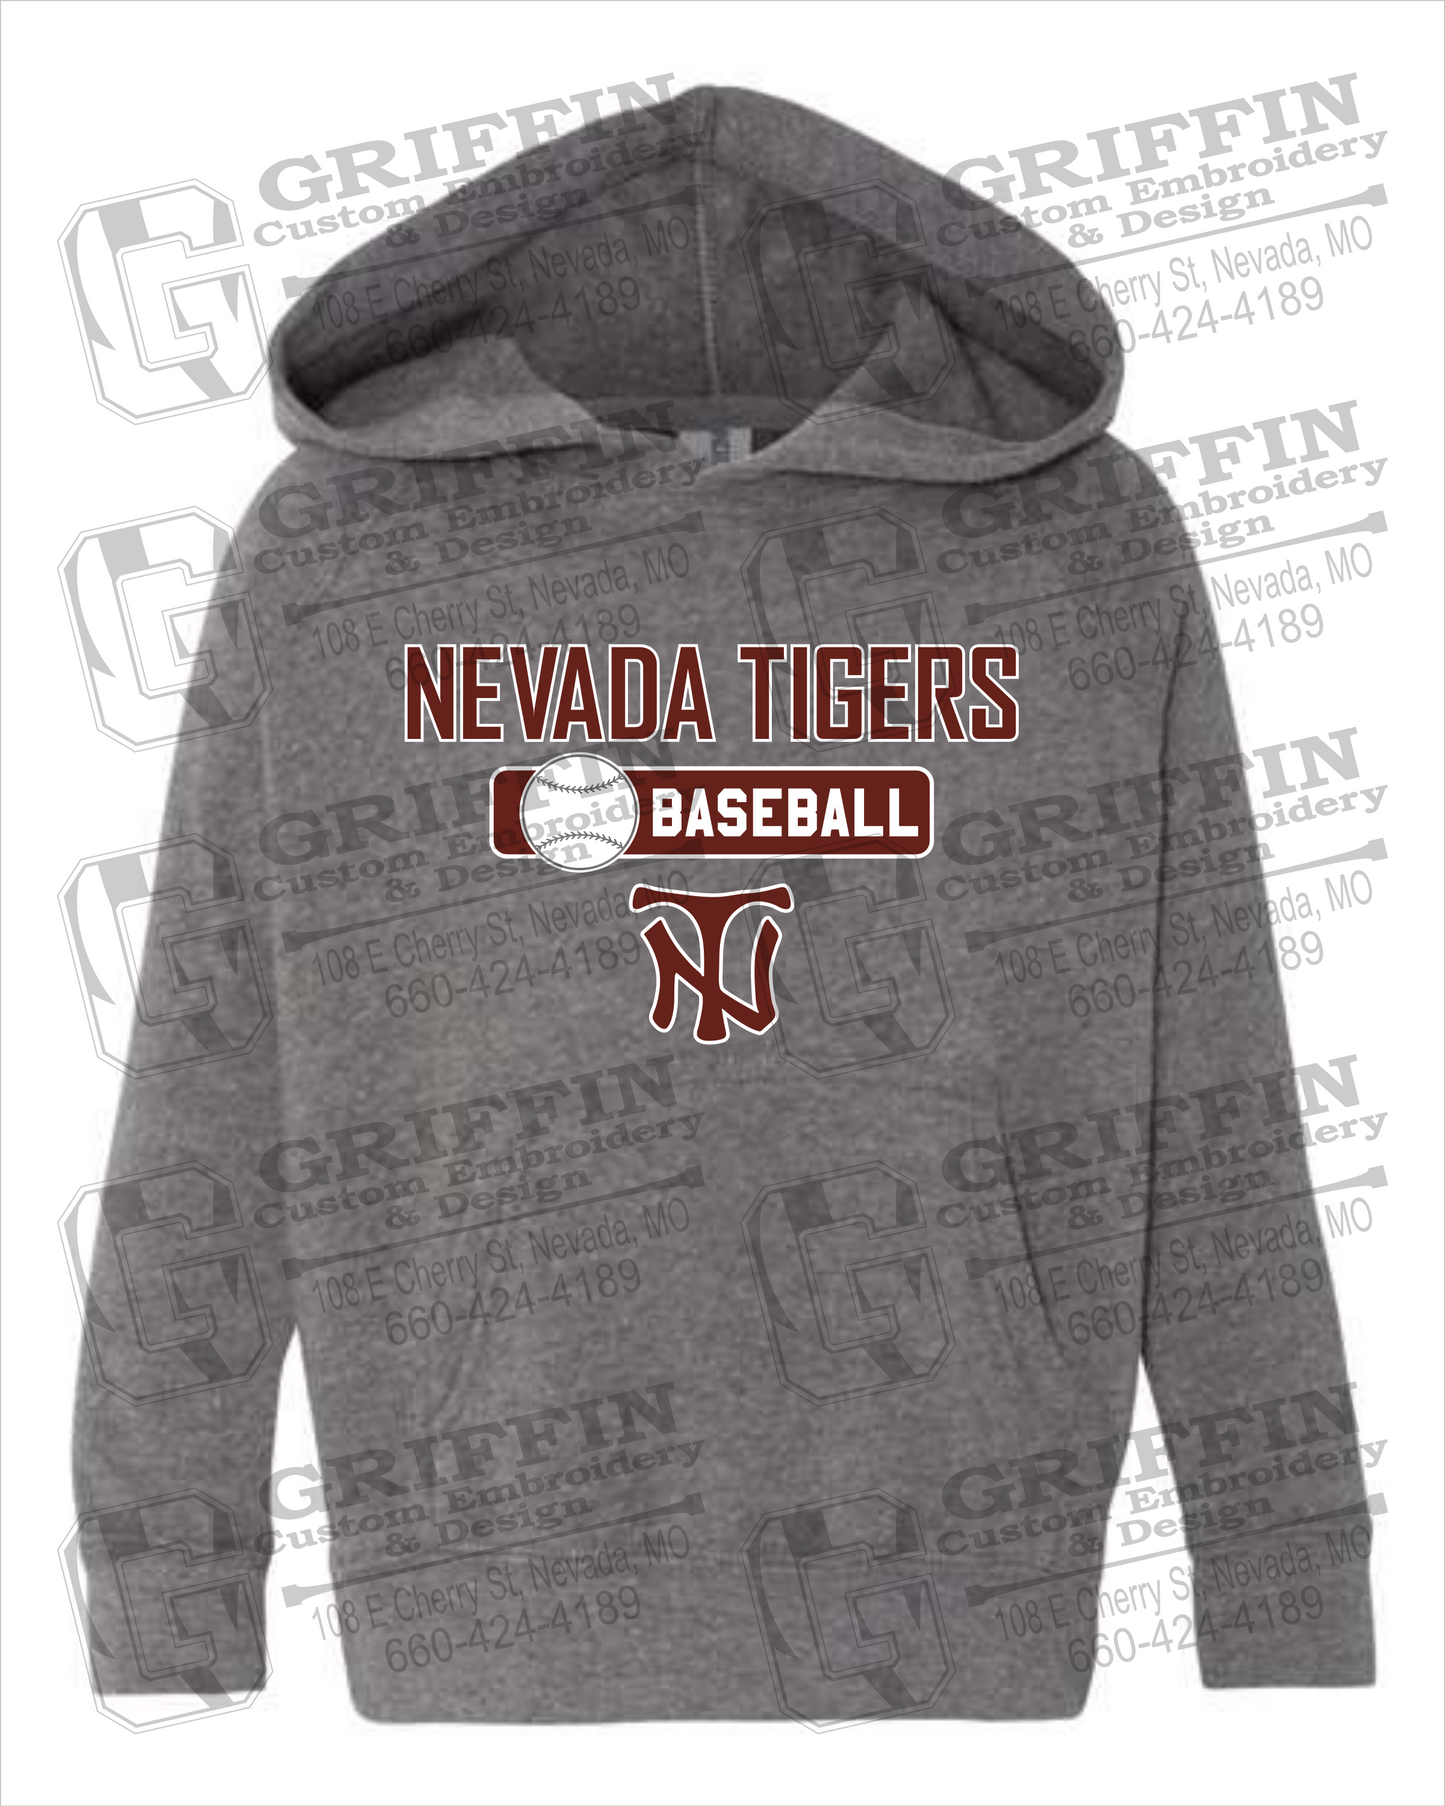 Nevada Tigers 24-S Toddler Hoodie - Baseball